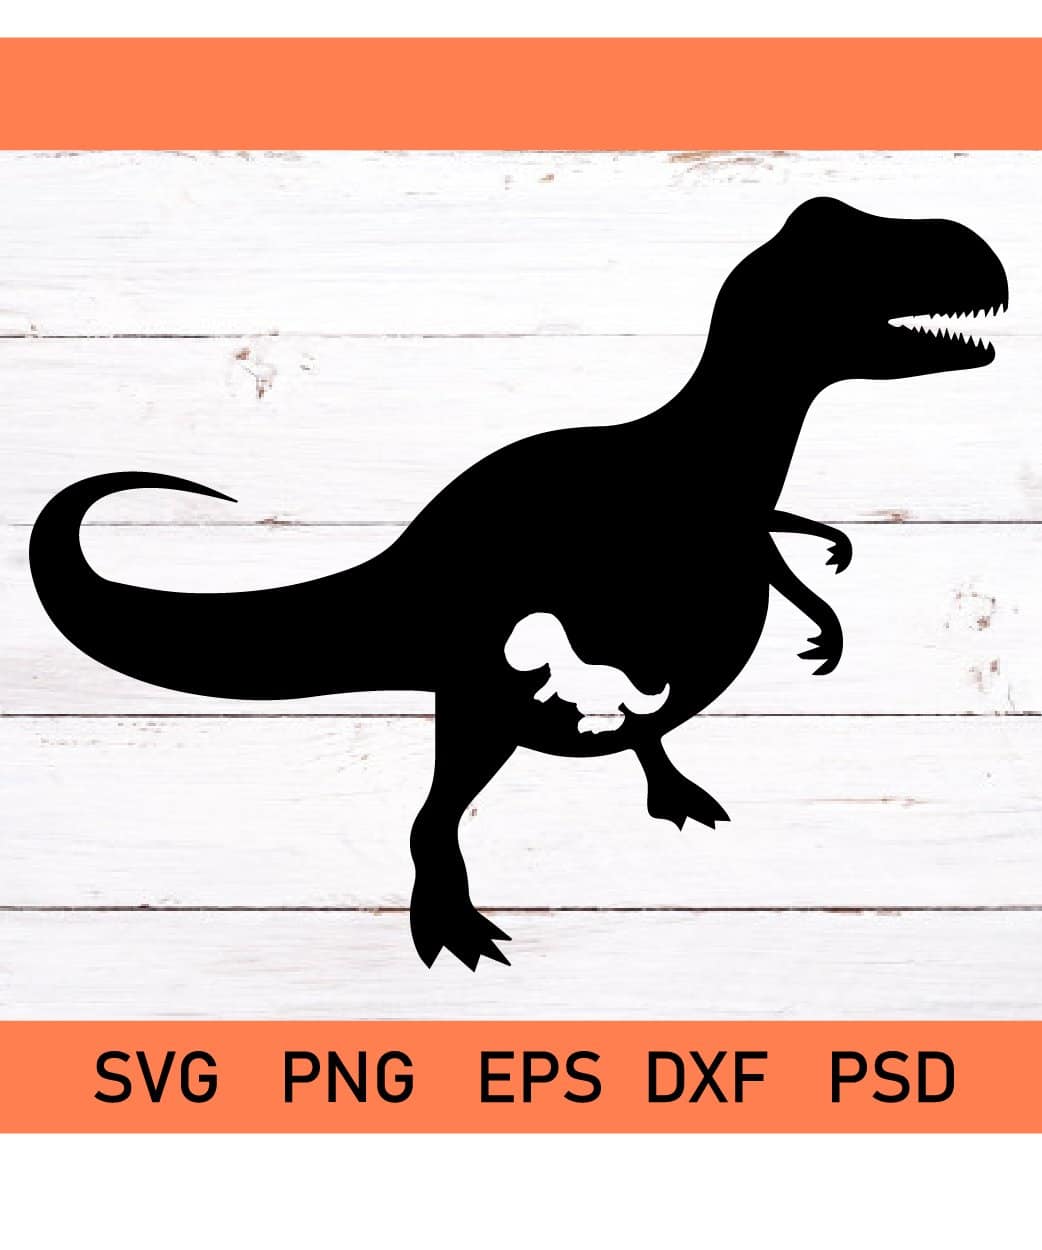 Preggosaurus SVG